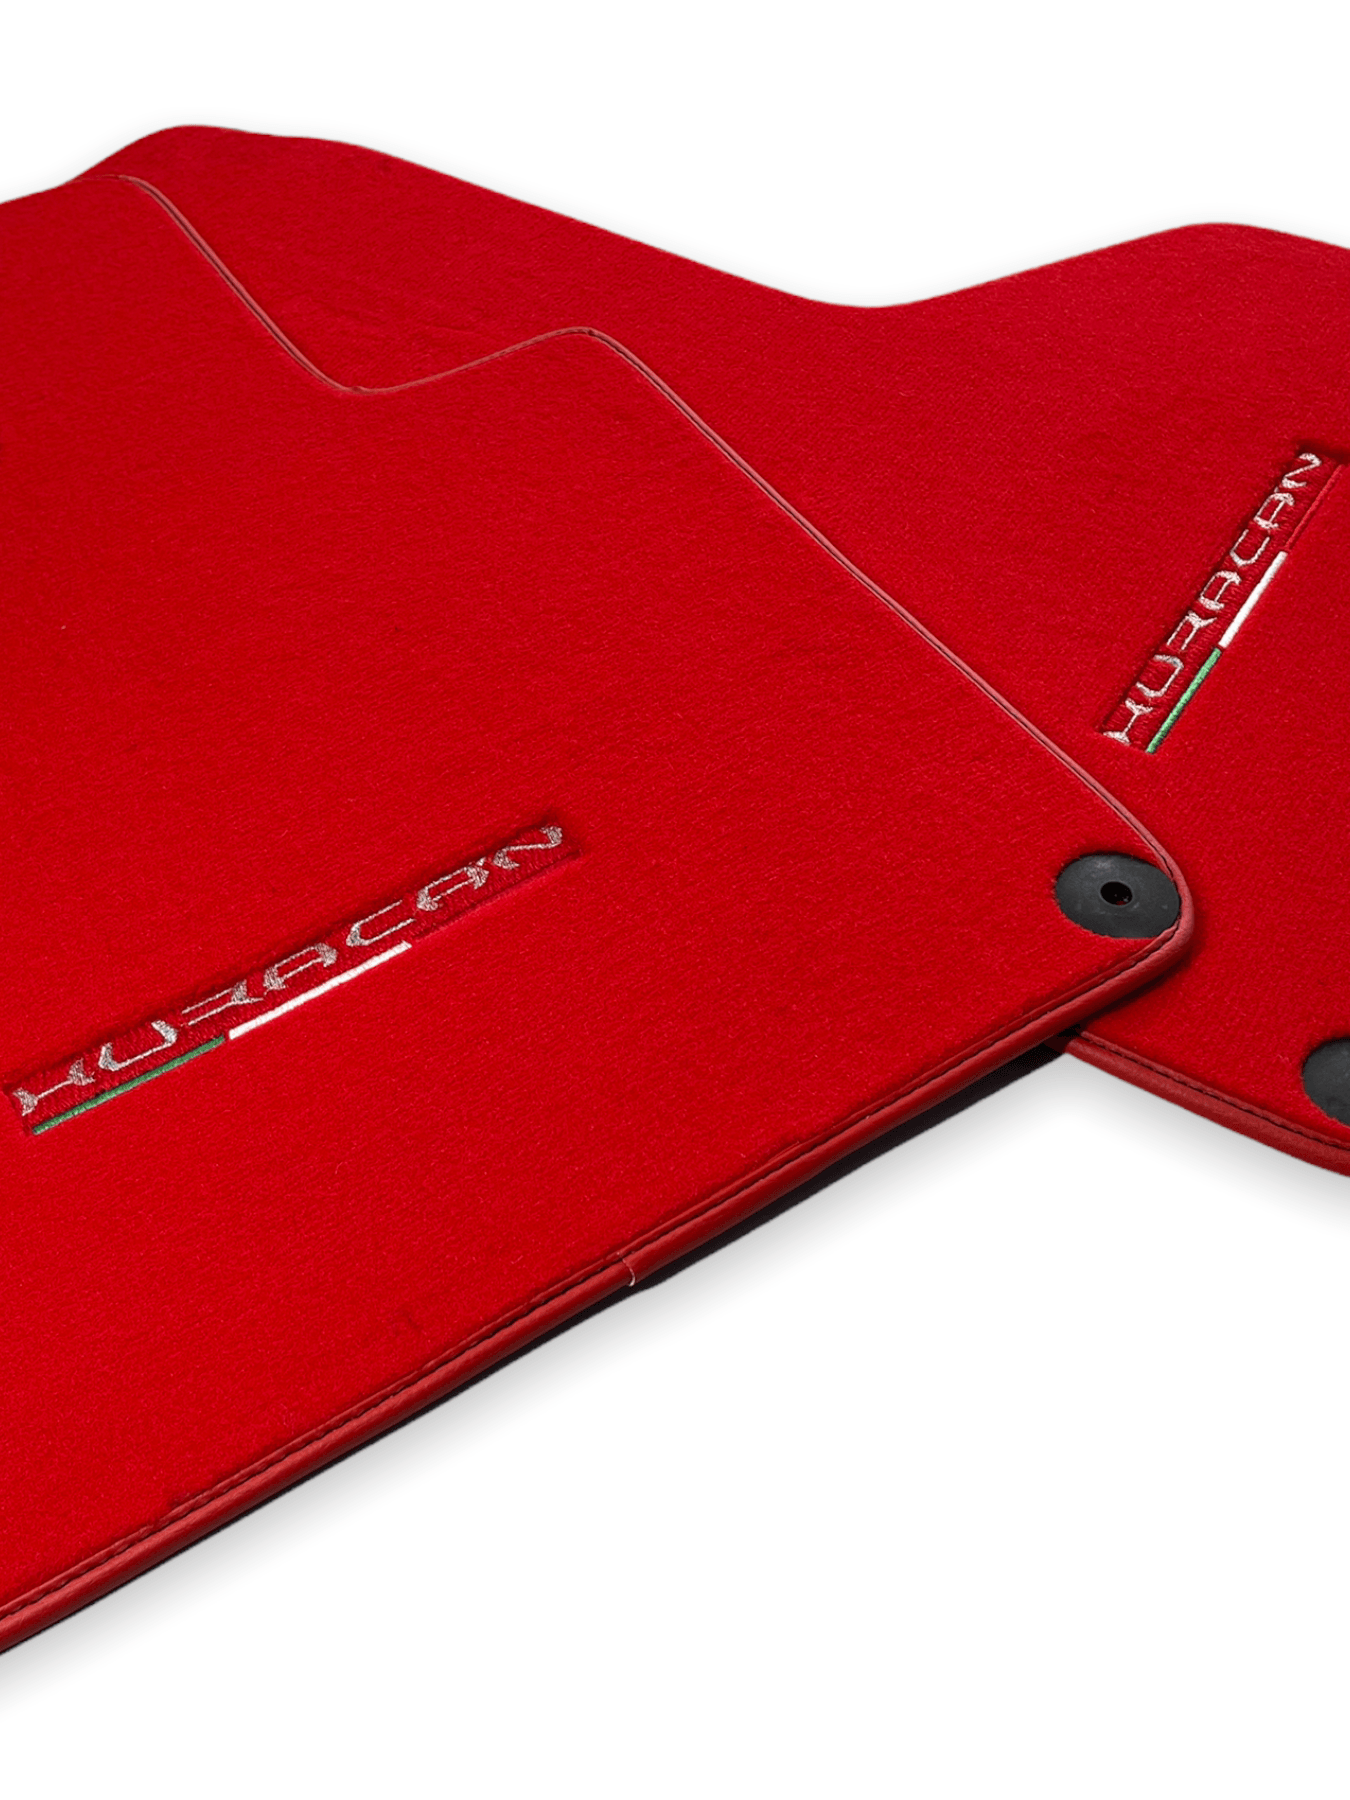 Floor Mats for Lamborghini Huracan Red Color - AutoWin